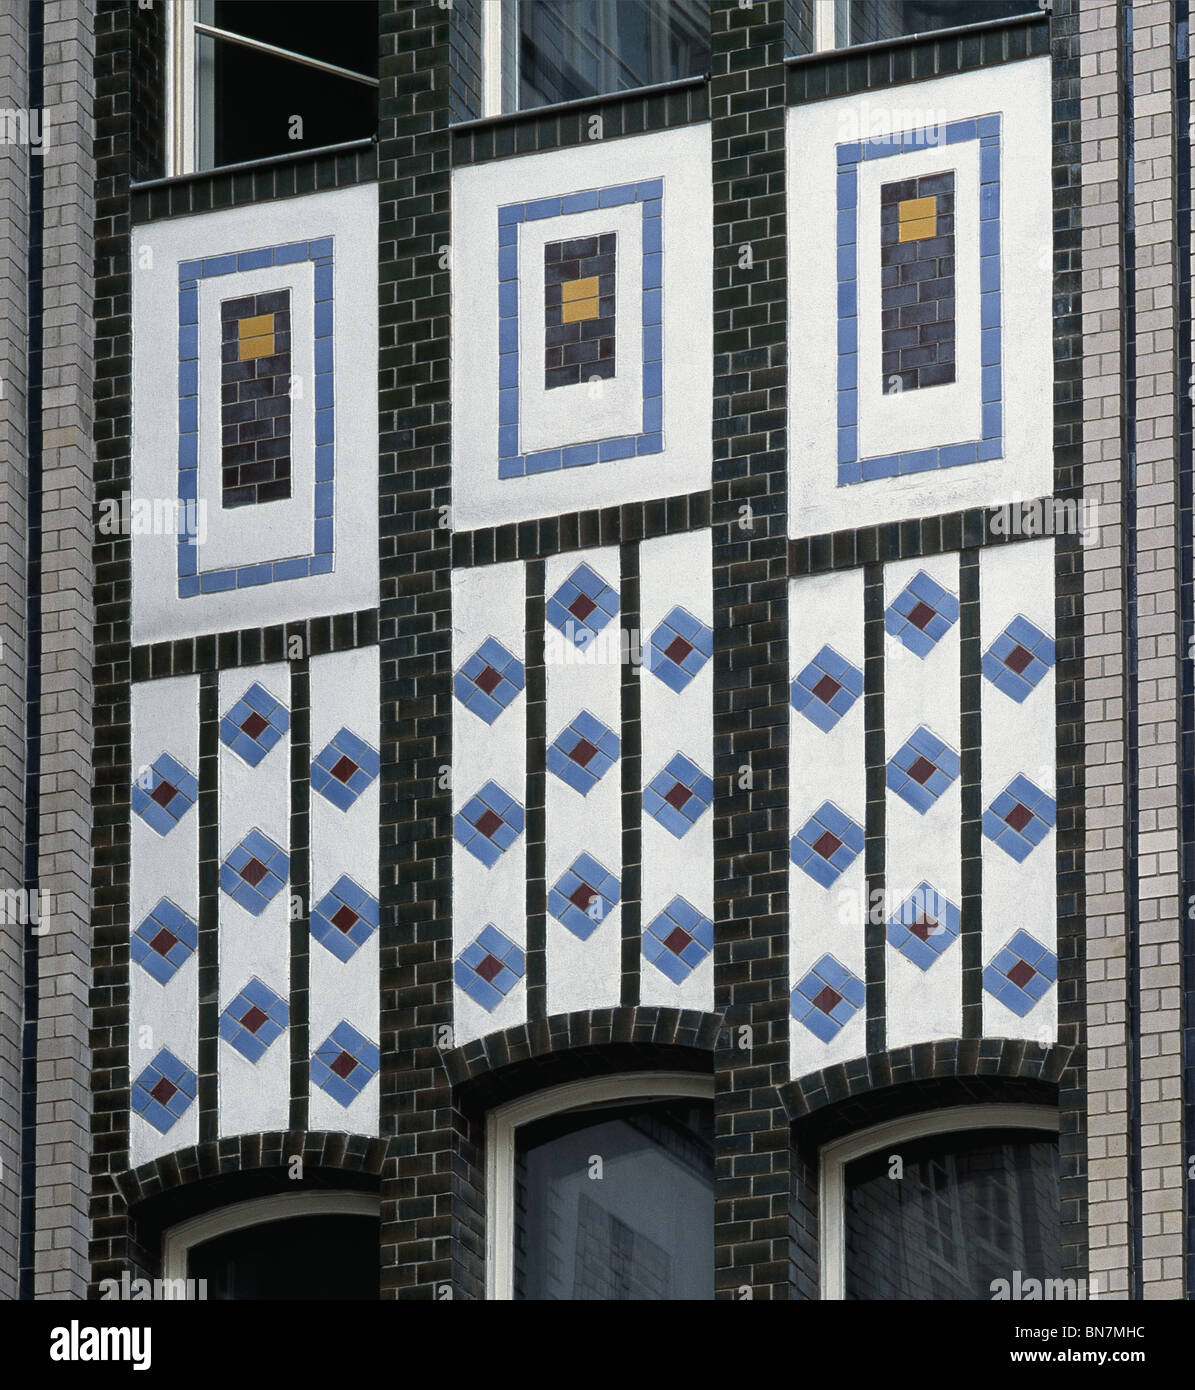 Tiles in Hackesche Hofe Berlin, Germany. 1920s courtyard with Jugendstil Art Nouveau ceramic tiles. Stock Photo